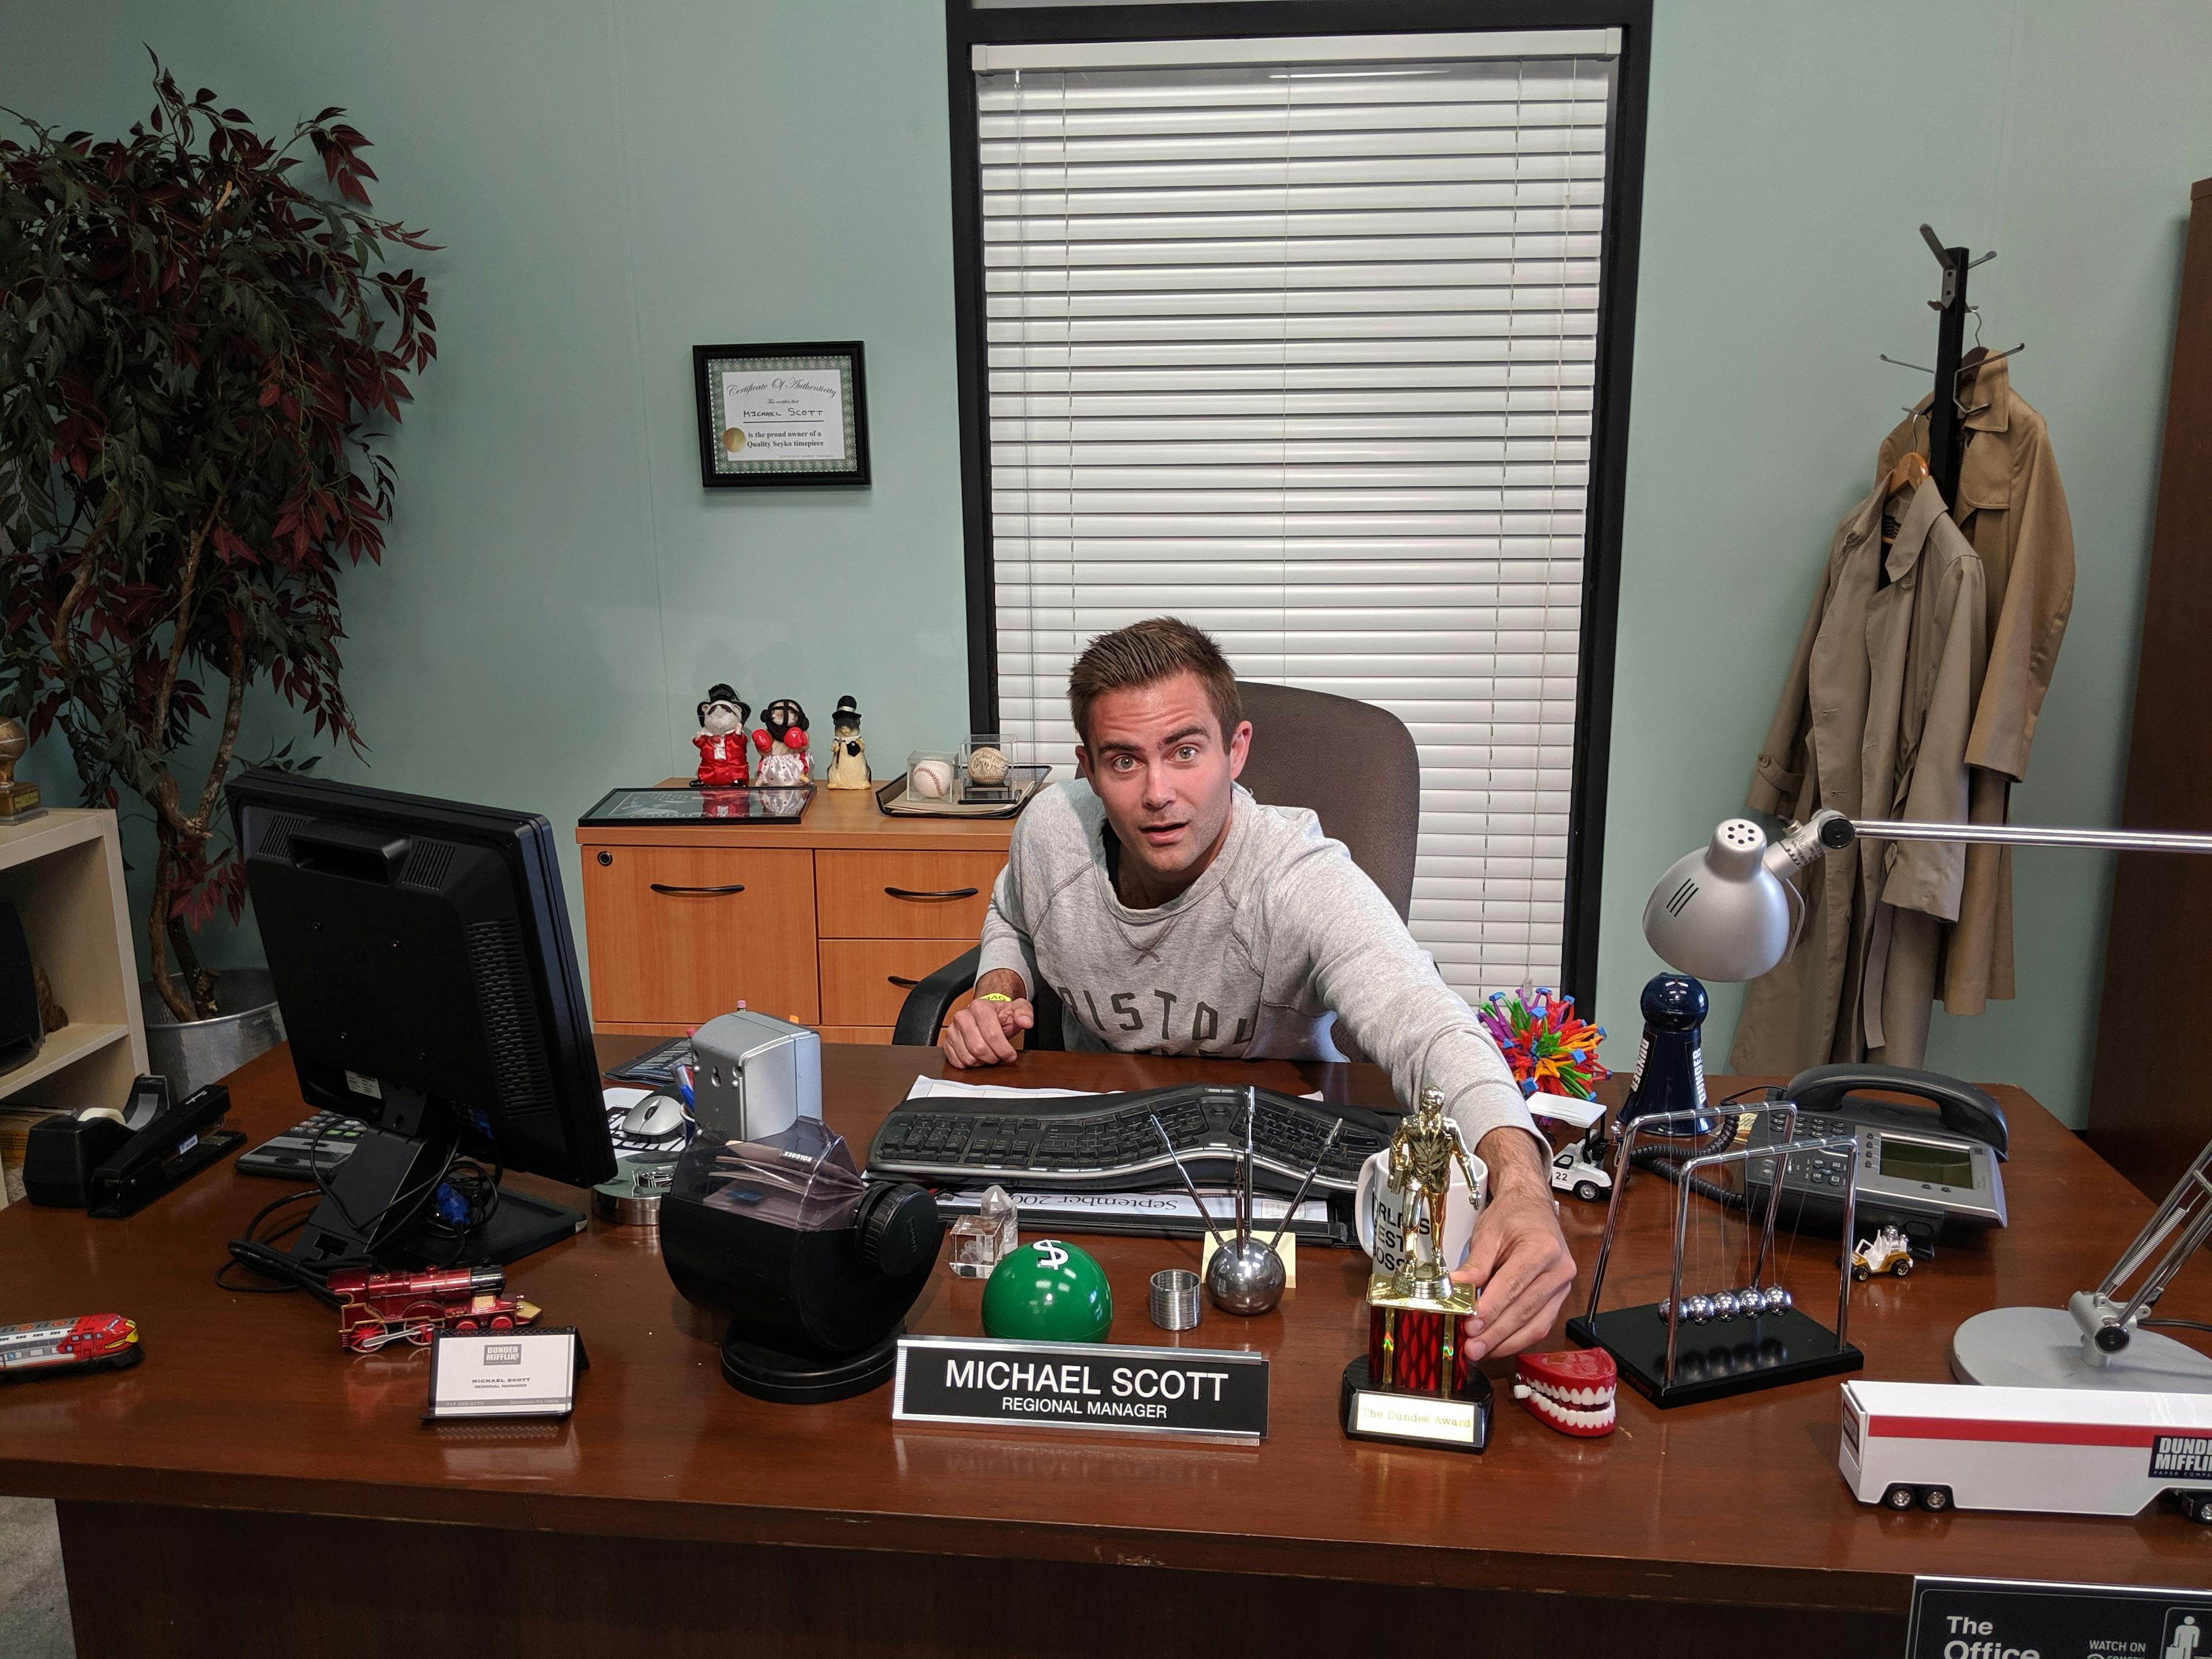 Alex at Michael Scott's desk